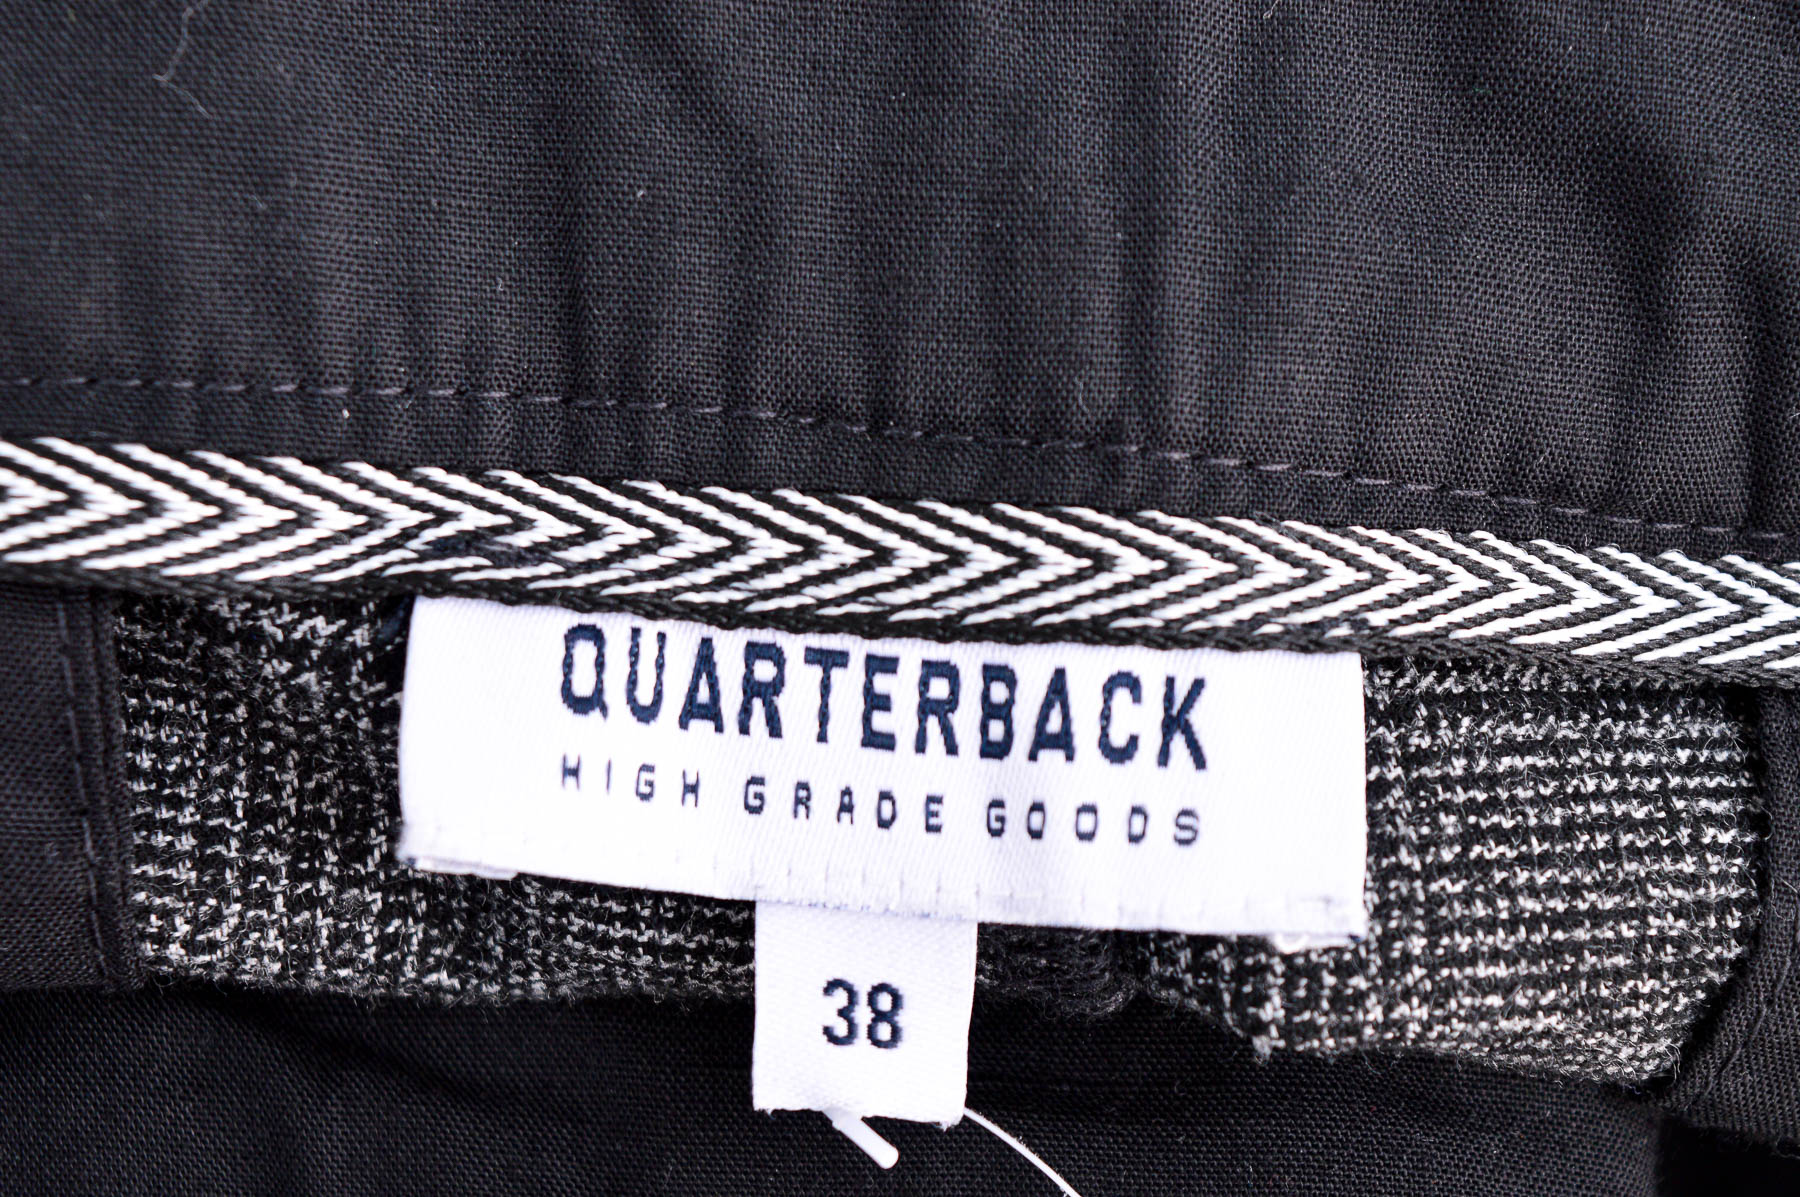 Men's trousers - QUARTERBACK by jbc - 2